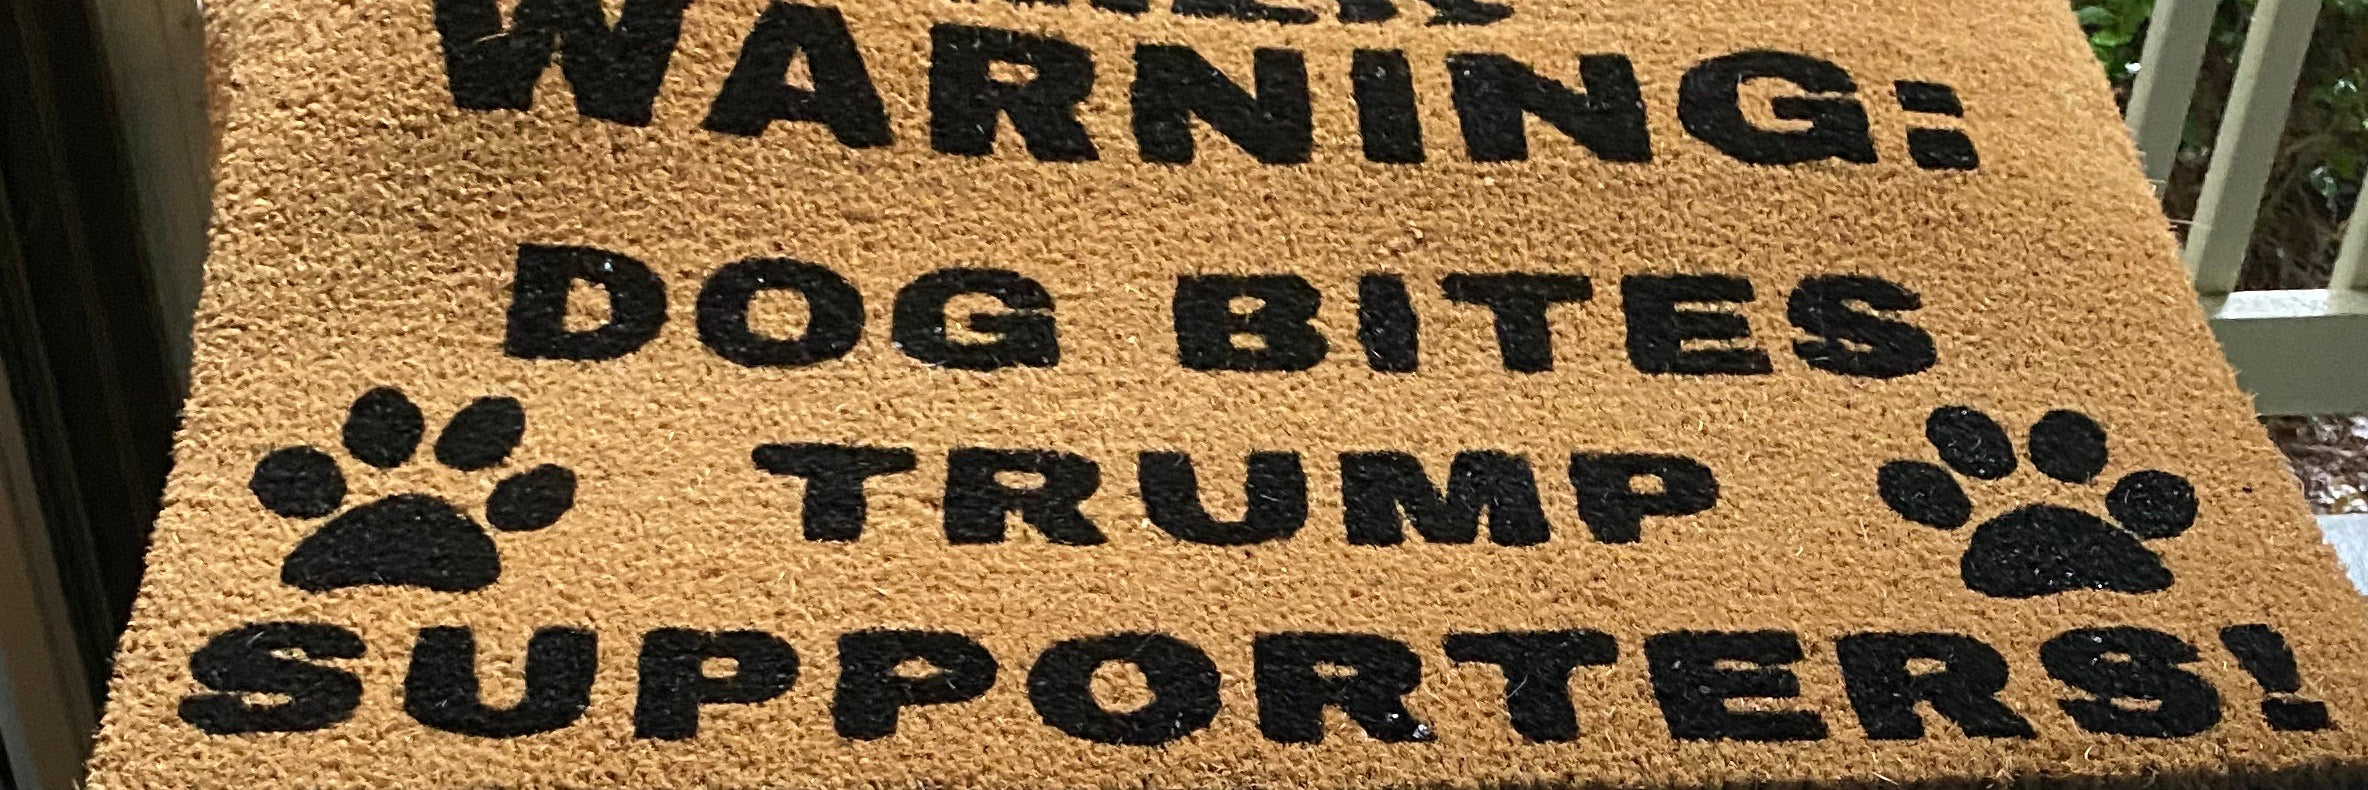 Dog Bites Trump Supporters